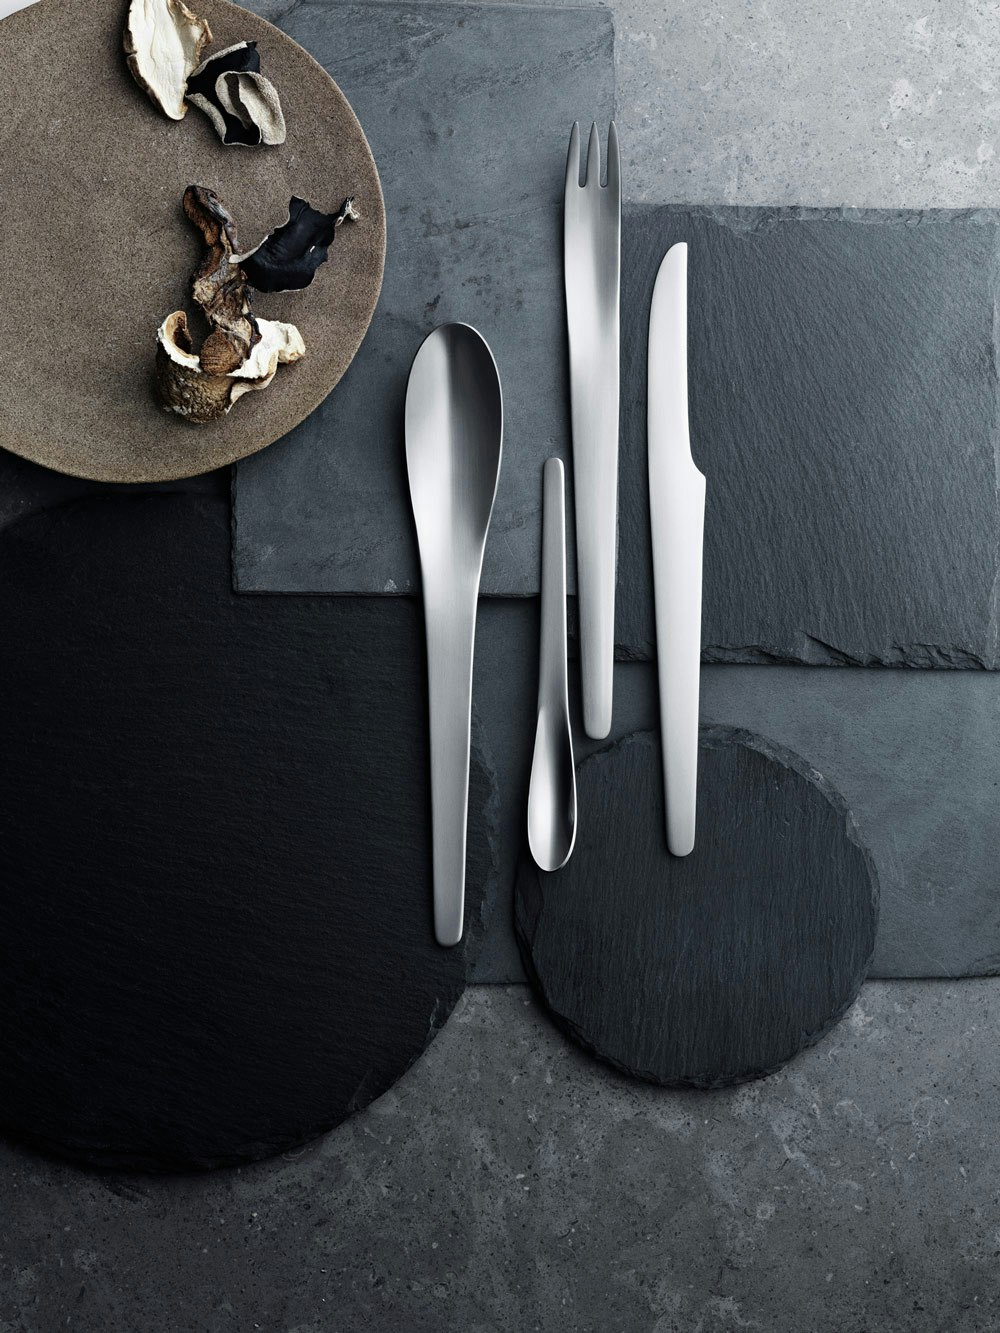 https://royaldesign.com/image/2/georg-jensen-arne-jacobsen-cutlery-set-of-4-matt-1?w=800&quality=80